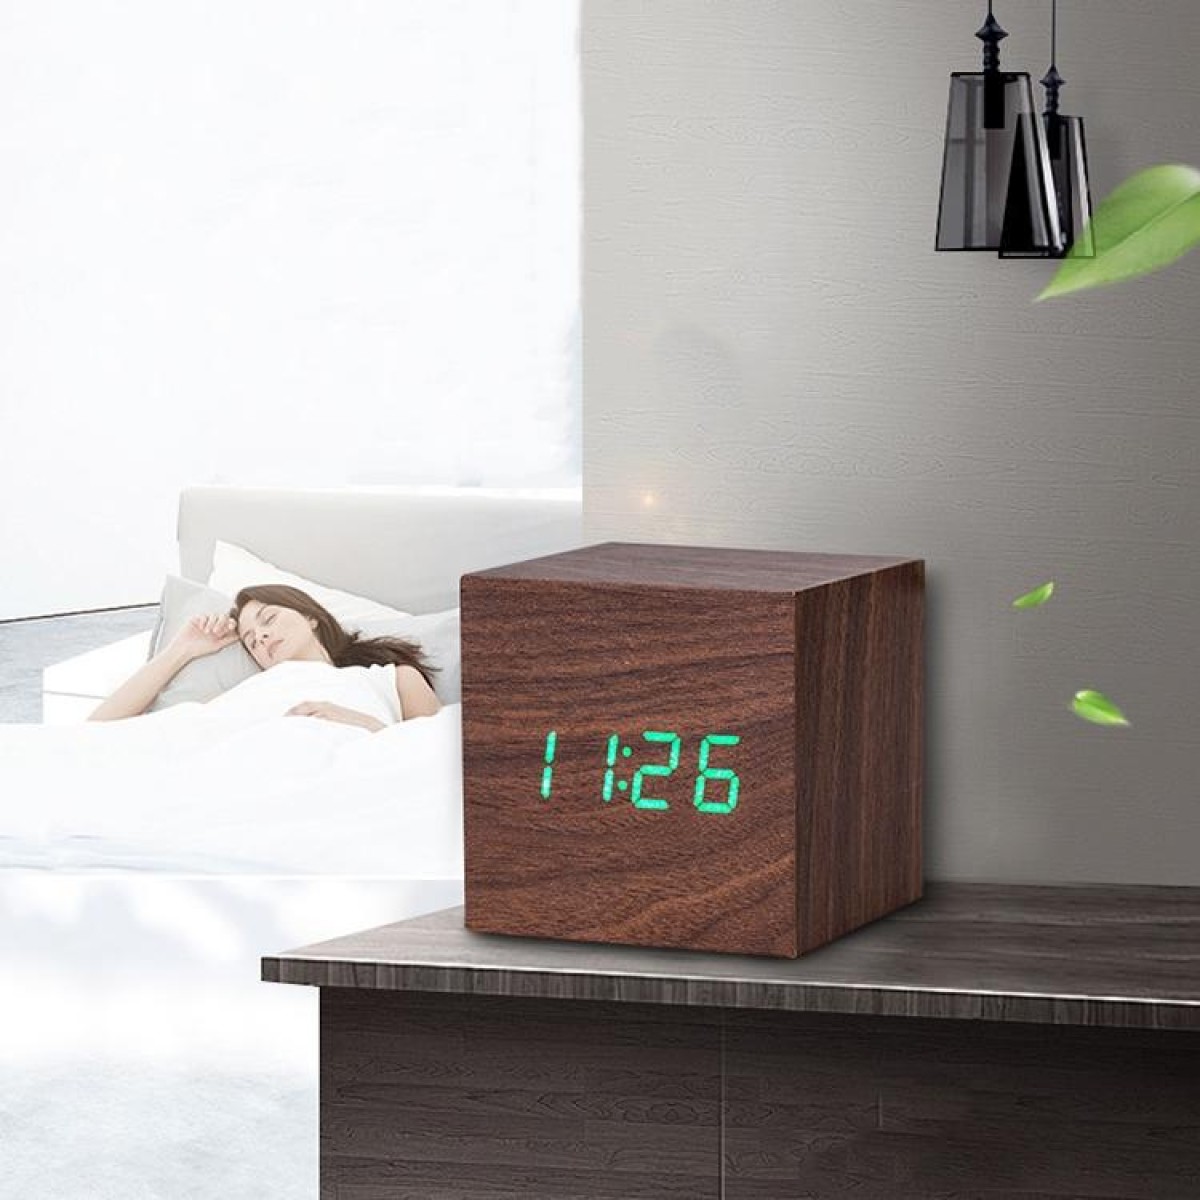 Multicolor Sounds Control Wooden Clock Modern Digital LED Desk Alarm Clock Thermometer Timer Wooden Red